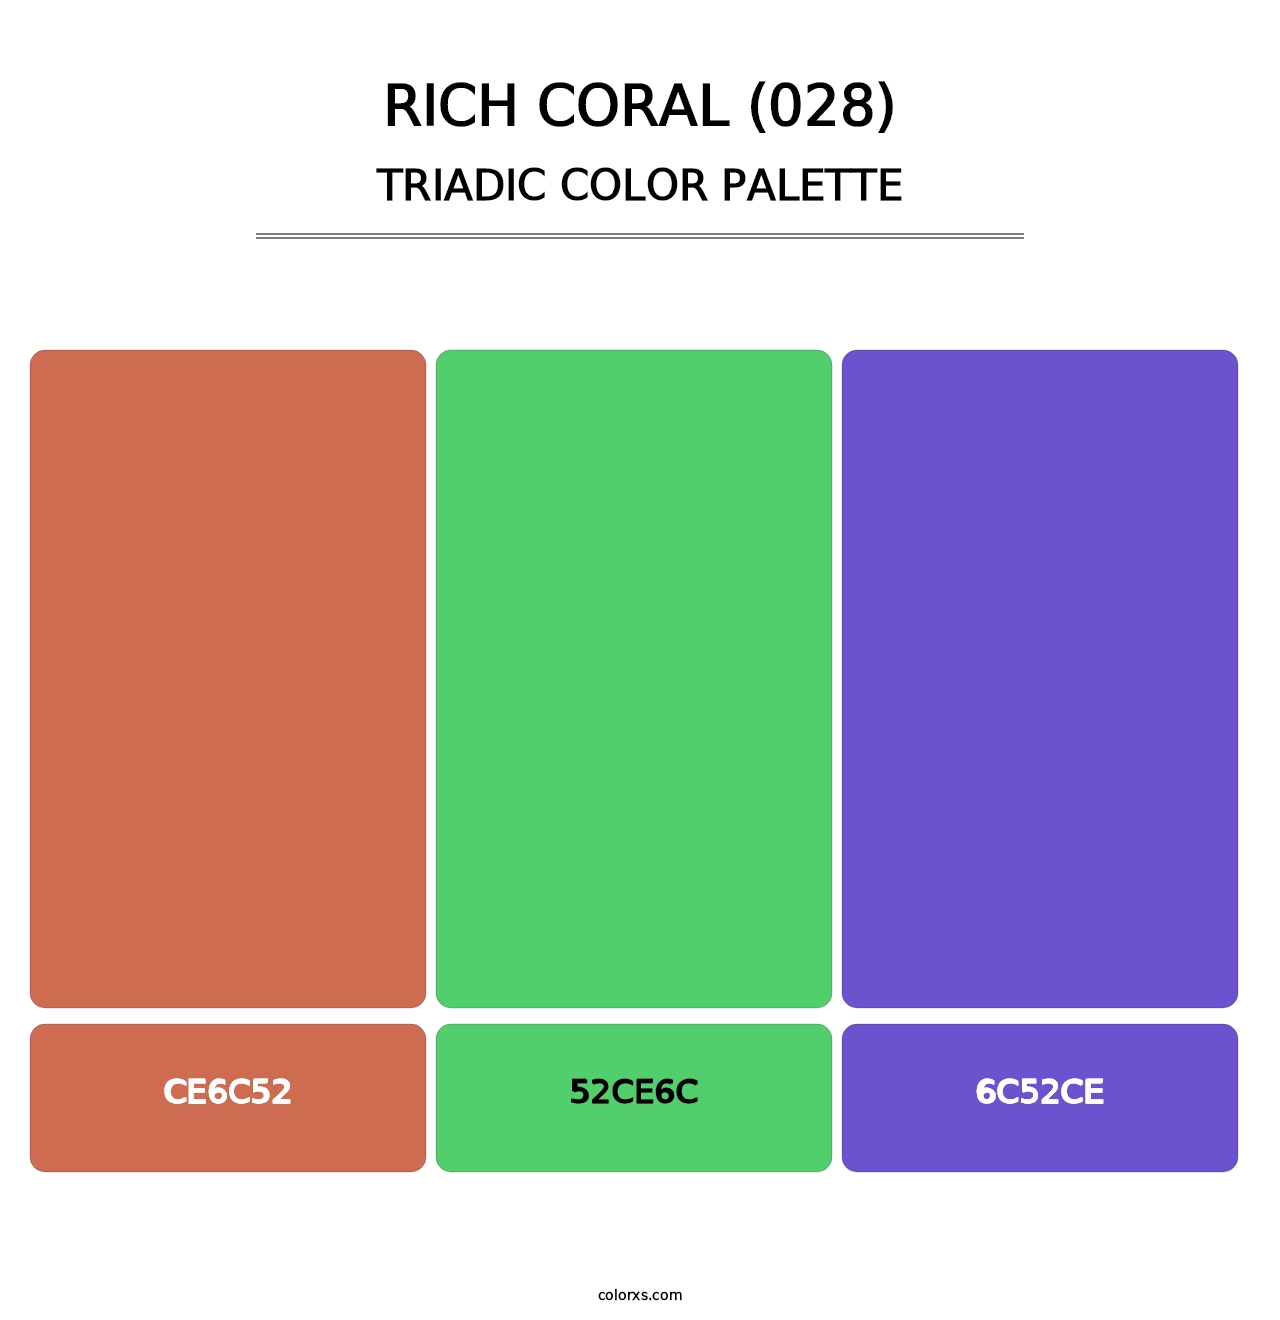 Rich Coral (028) - Triadic Color Palette